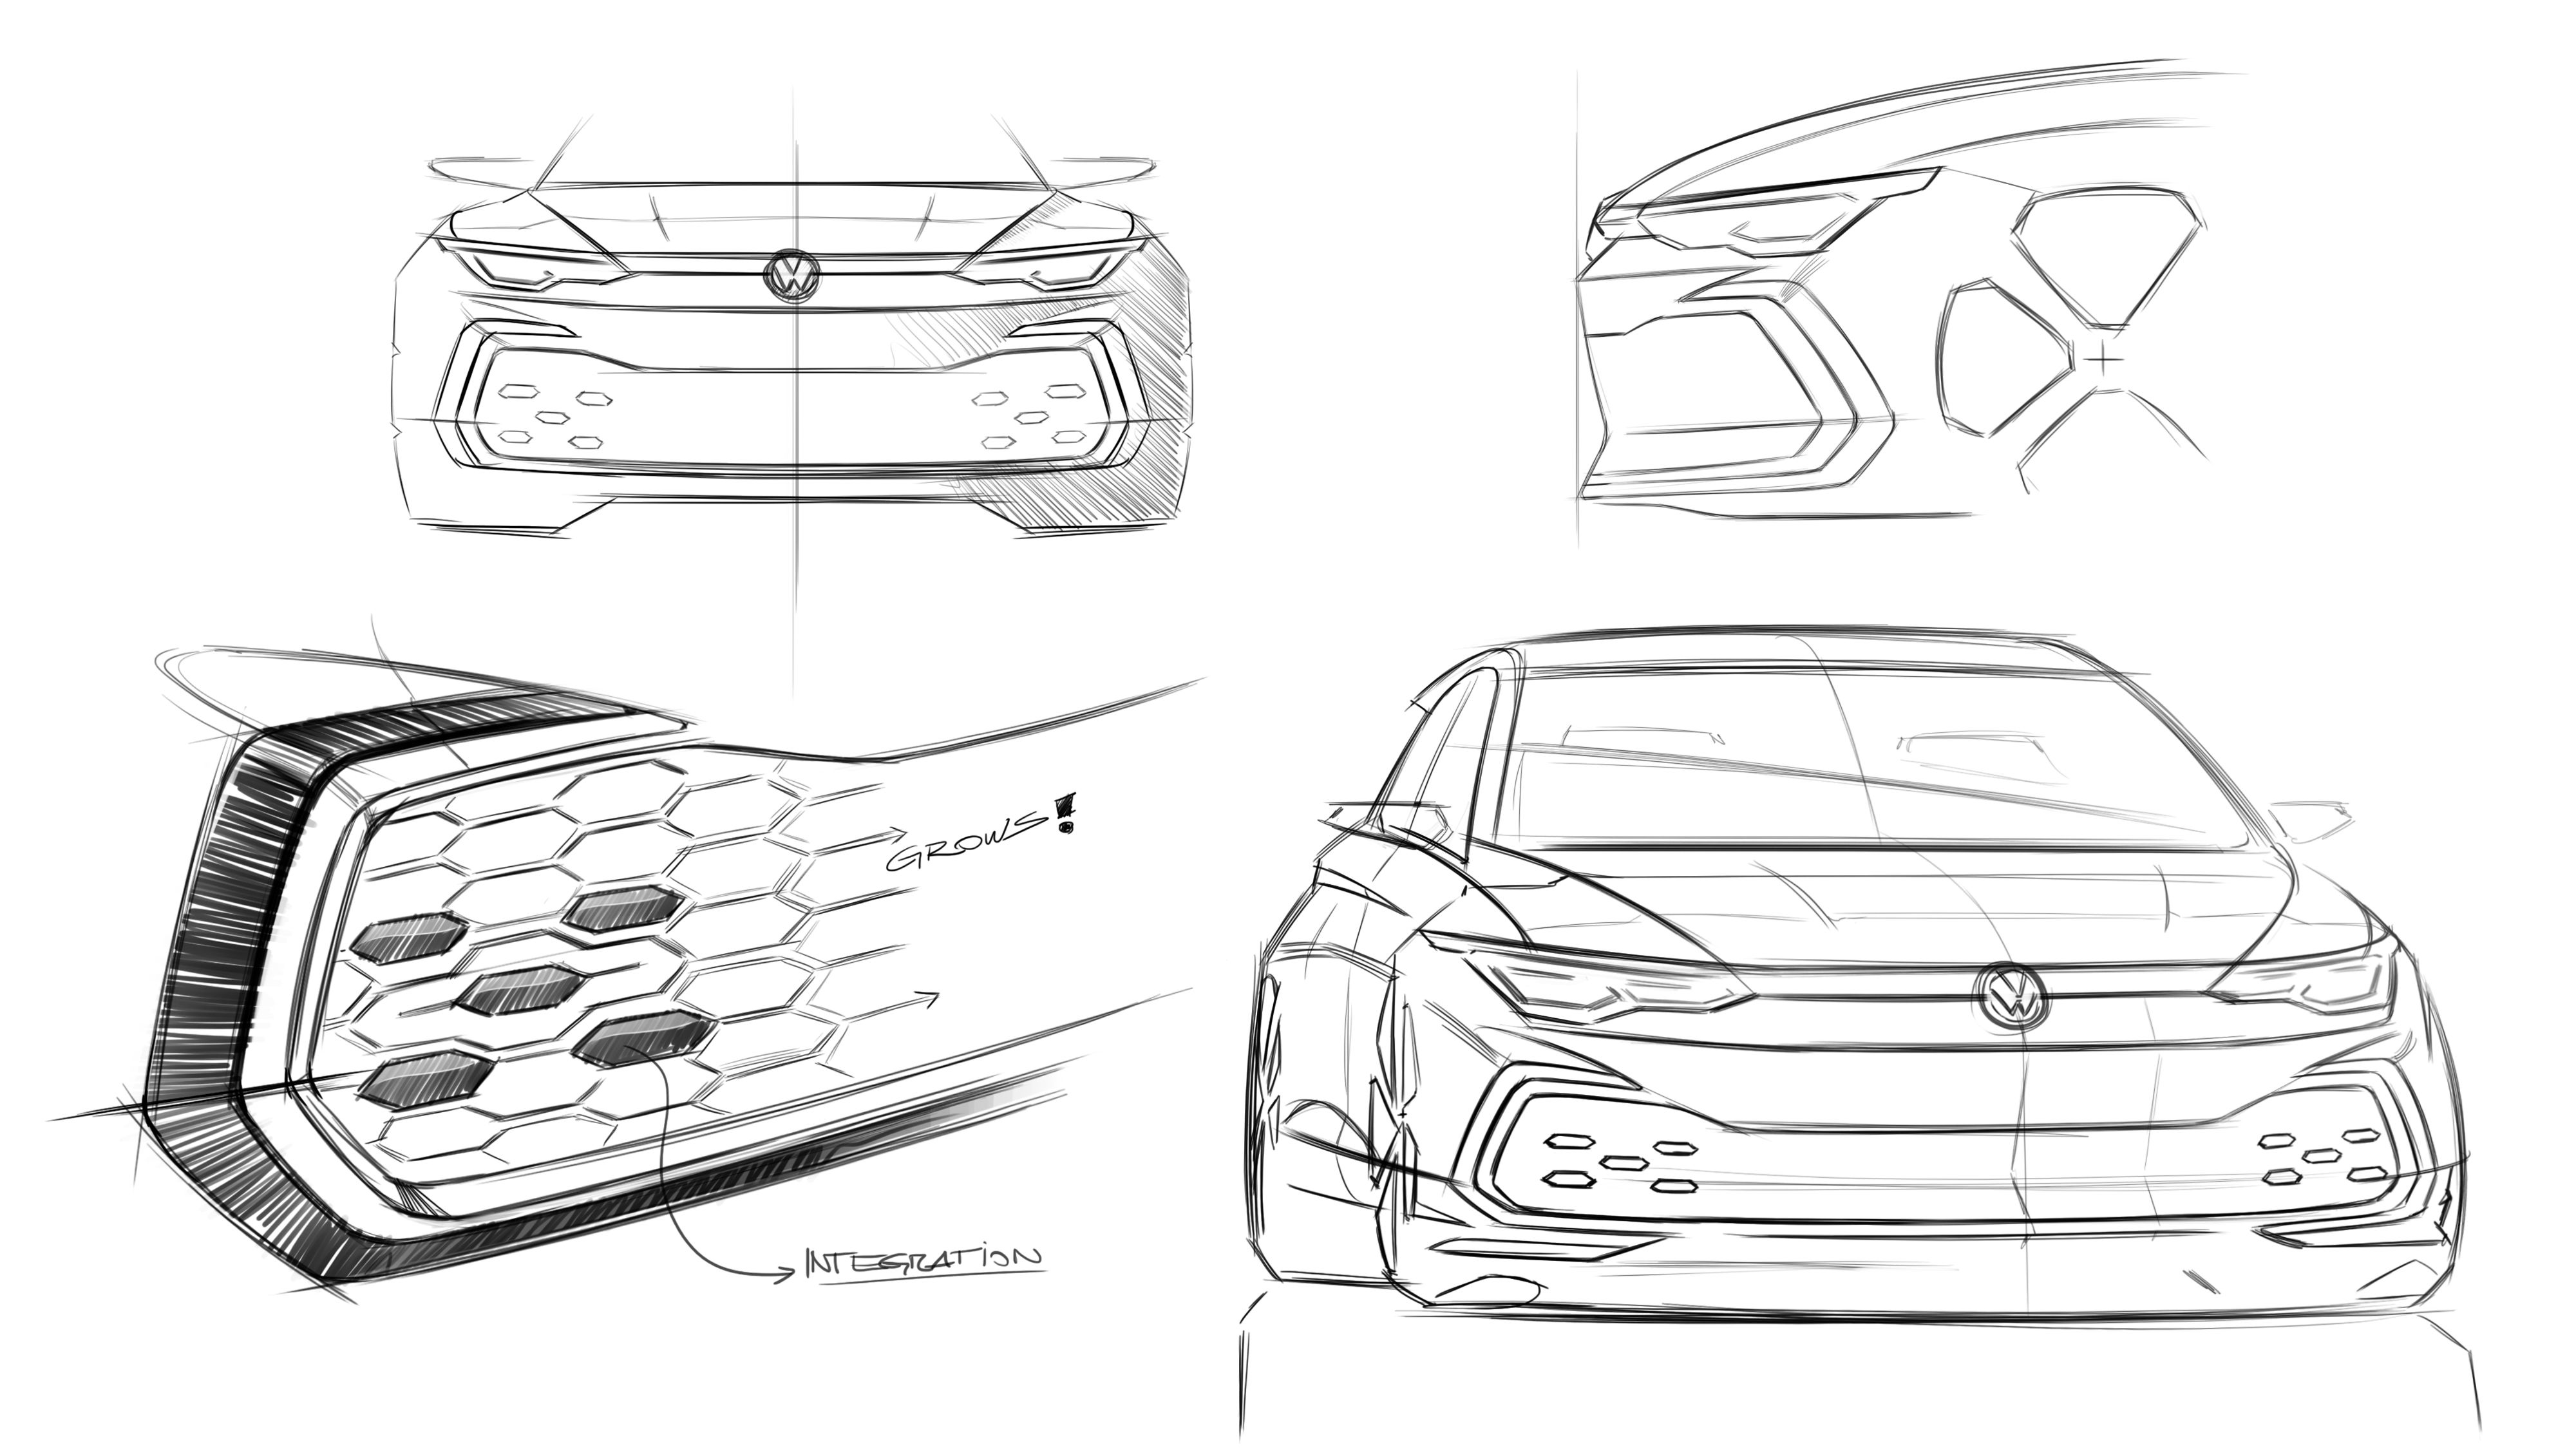 DESIGNERSS ESSENTIAL Sketch Car Like a Pro Designer  Udemy